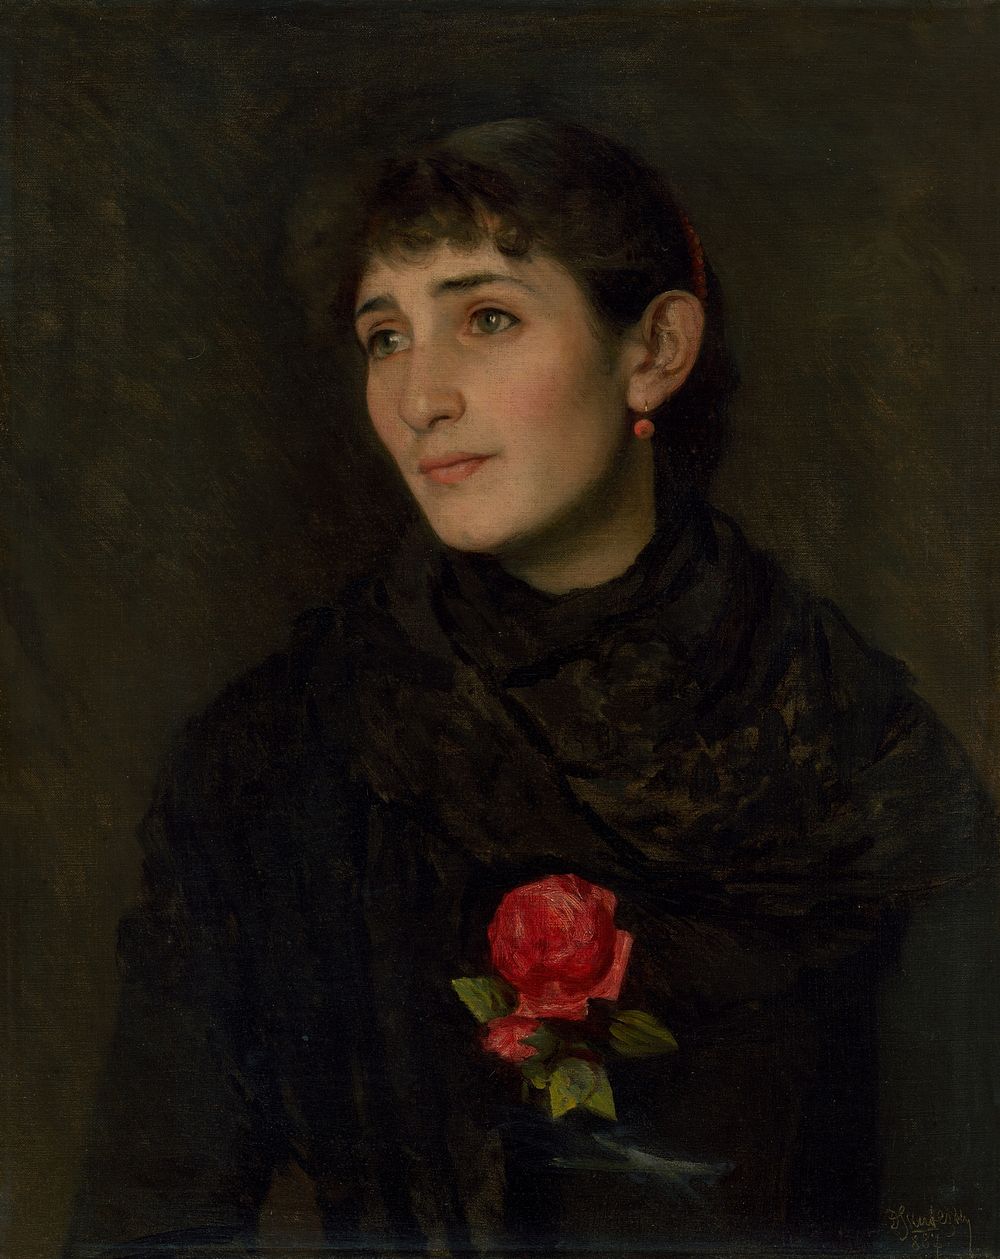 Portrait of his wife, Dominik Skutecky